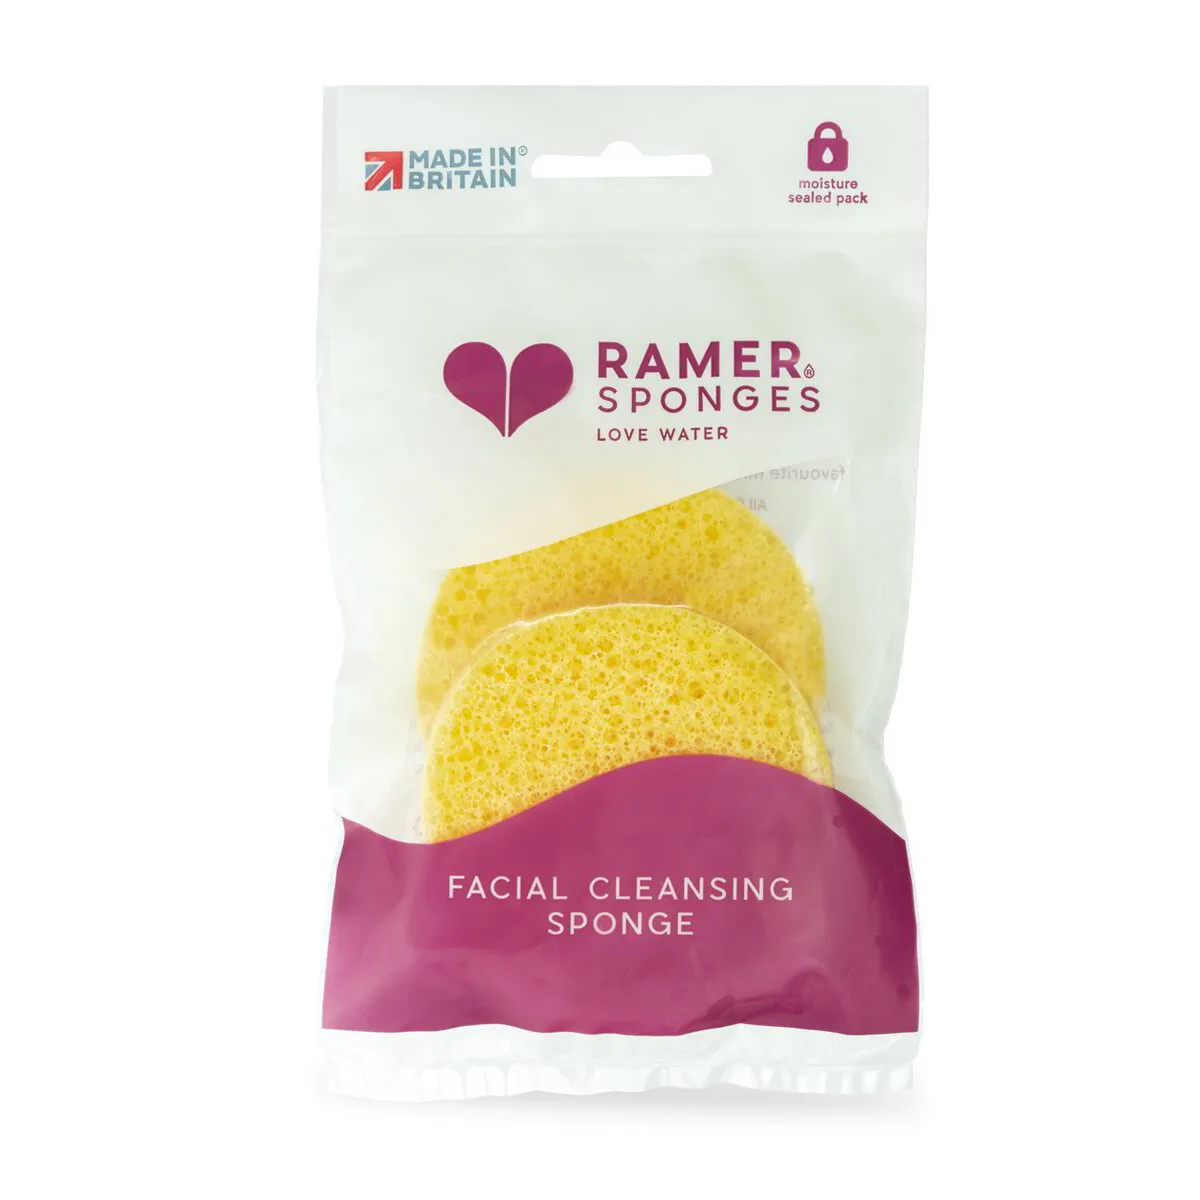 Ramer Facial Cleansing Sponge